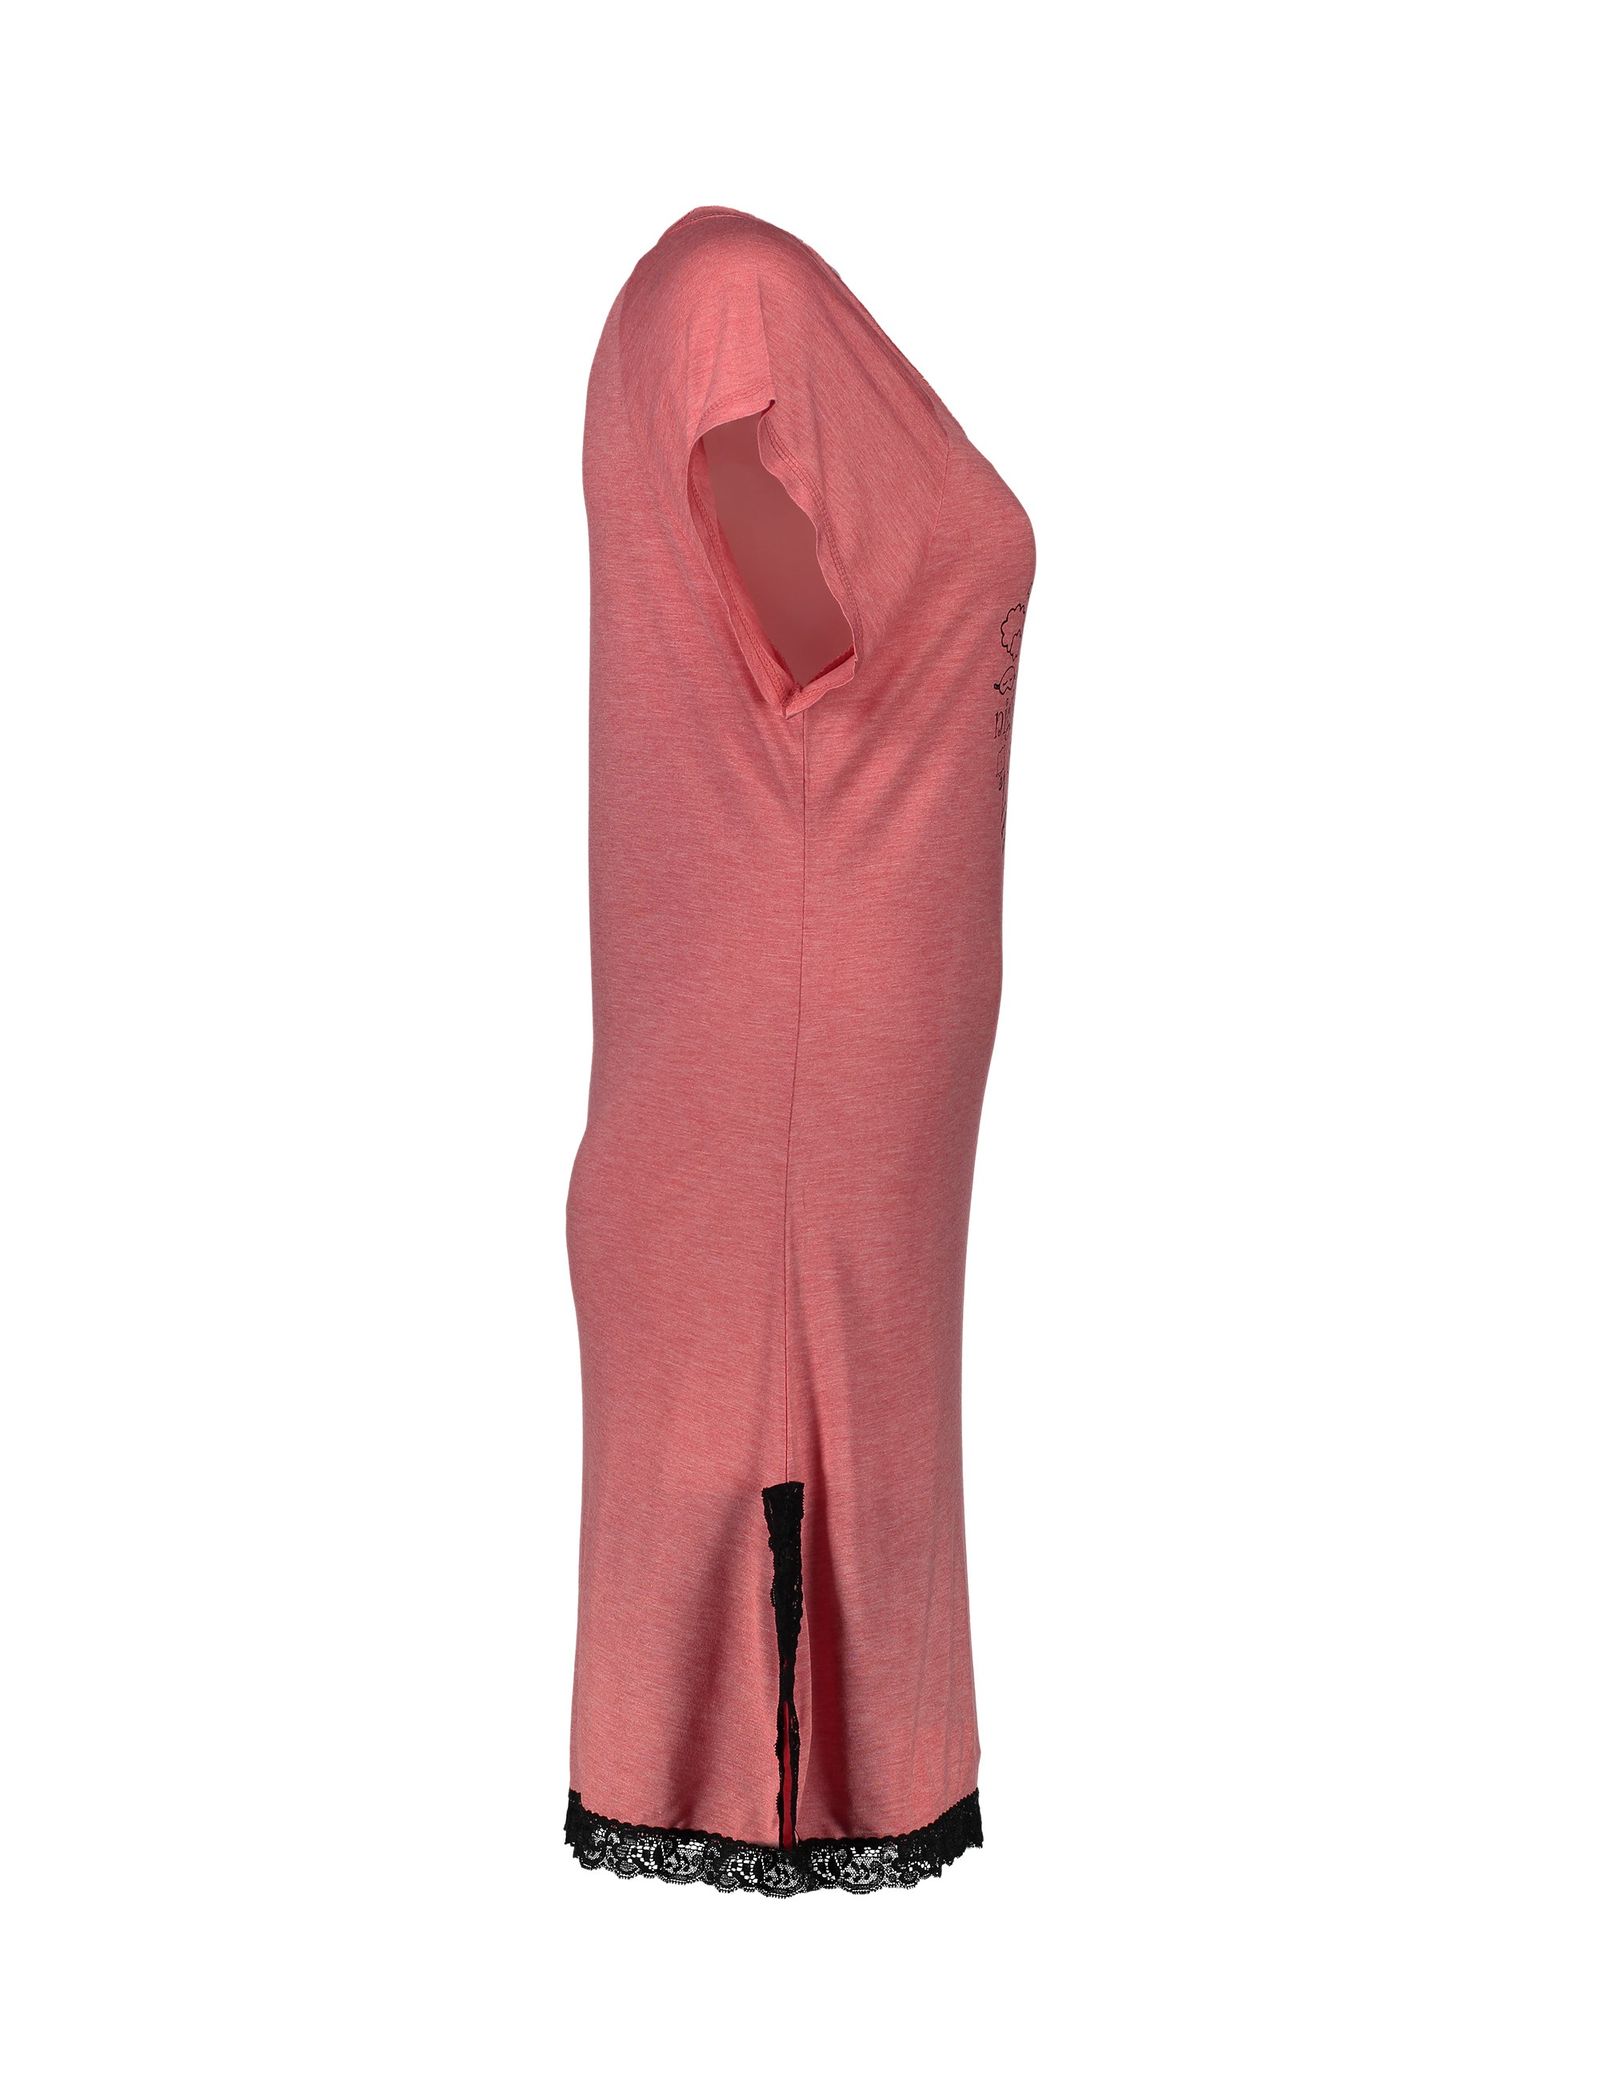 لباس خواب مودال زنانه - گارودی - قرمز صورتي ملانژ - 5